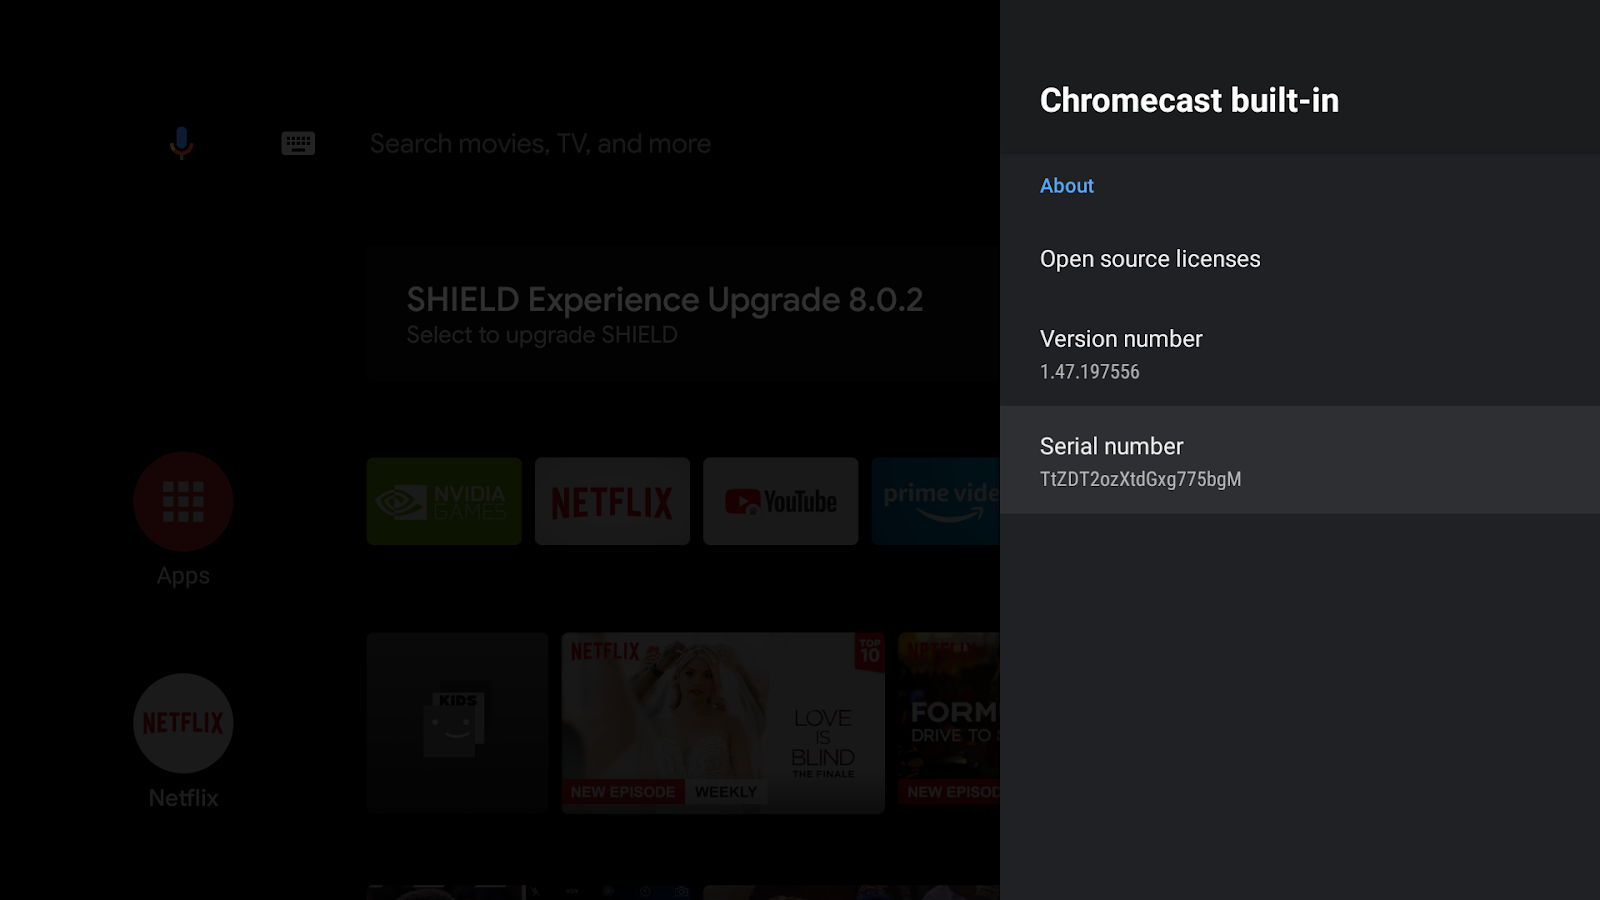 Android TV 屏幕上的图片，其中显示了“内置 Chromecast”屏幕、版本号和序列号